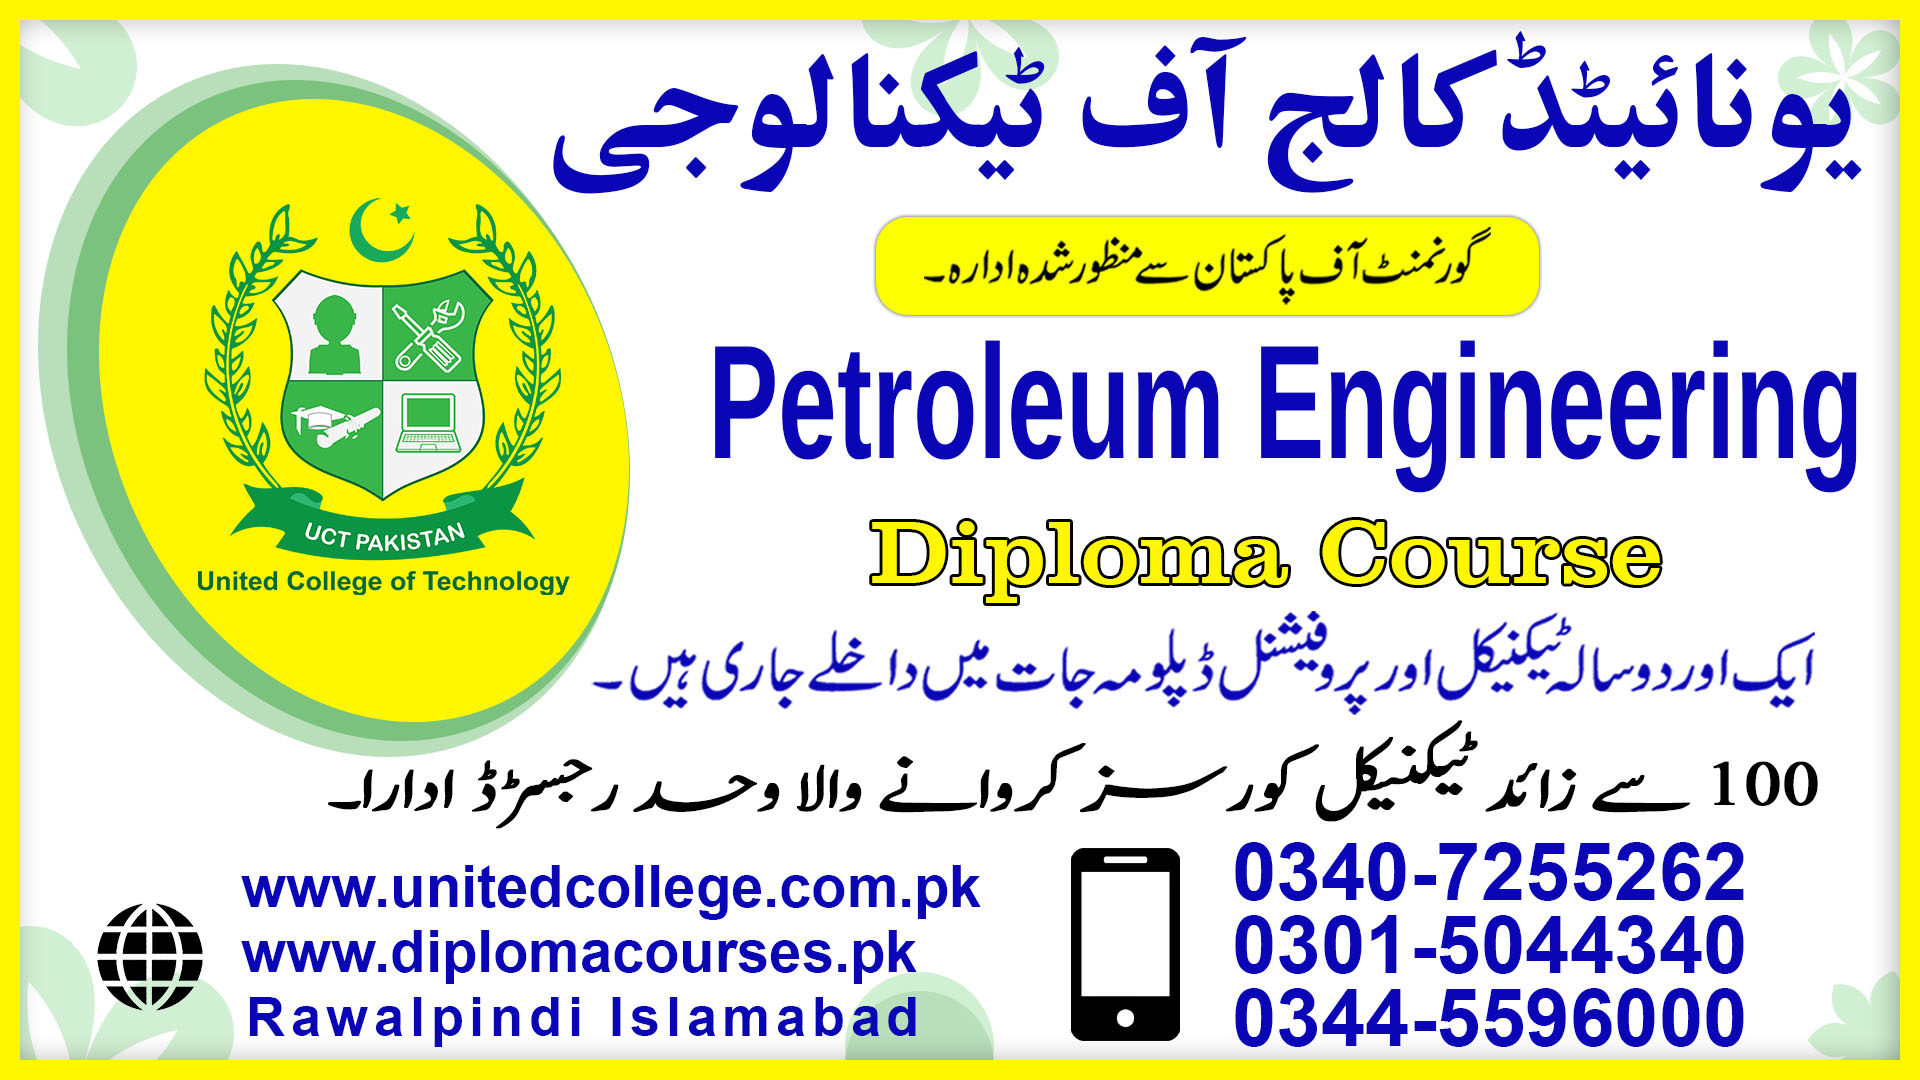 PETROLEUM ENGINEERING COURSE IN RAWALPINDI ISLAMABAD PAKISTAN